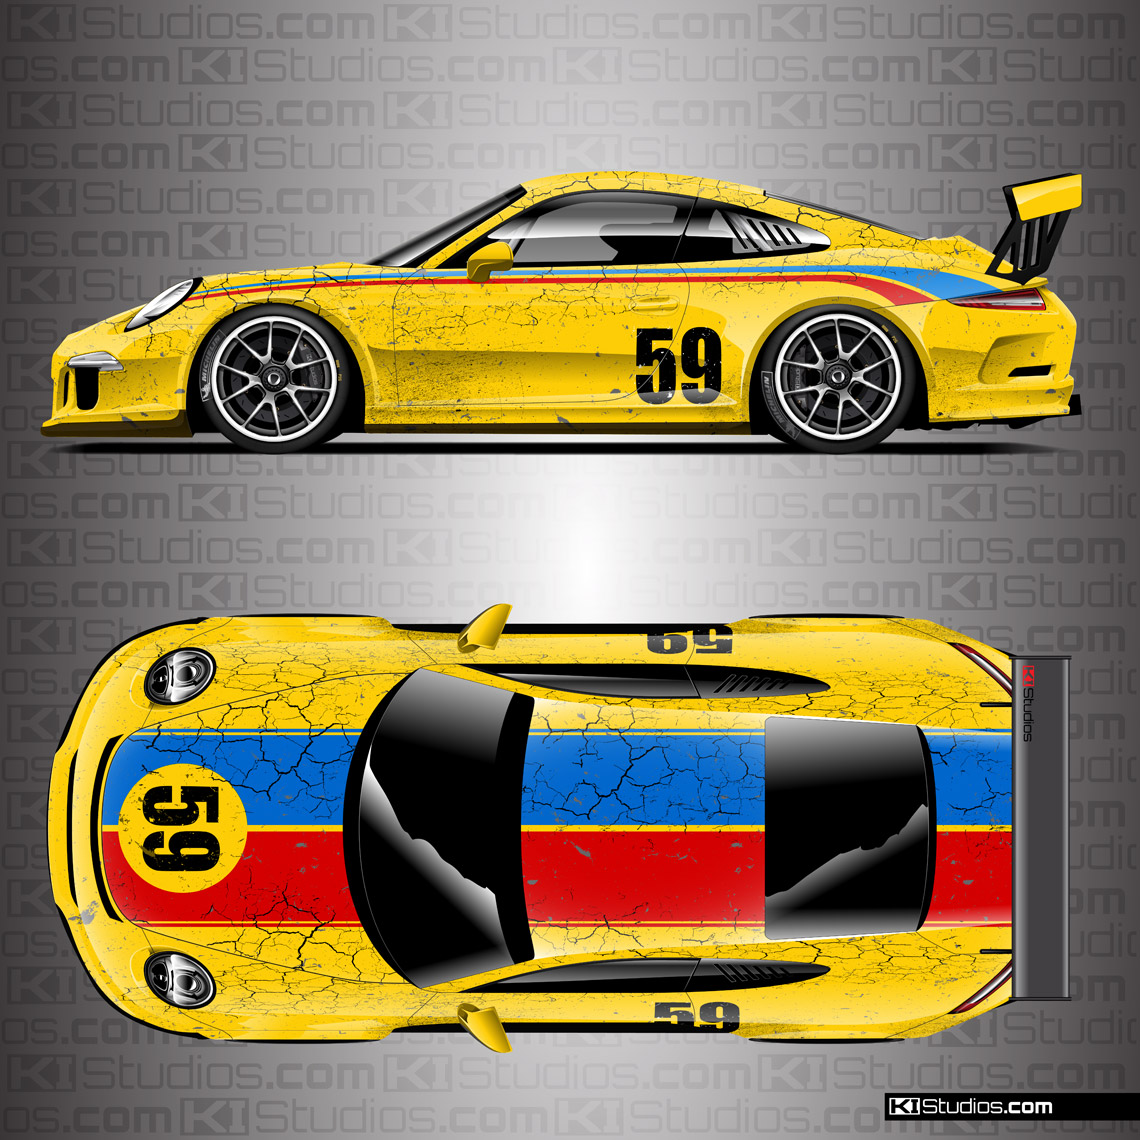 Porsche 991 GT3 Cup Car Livery by KI Studios - Yellow, Blue, Red